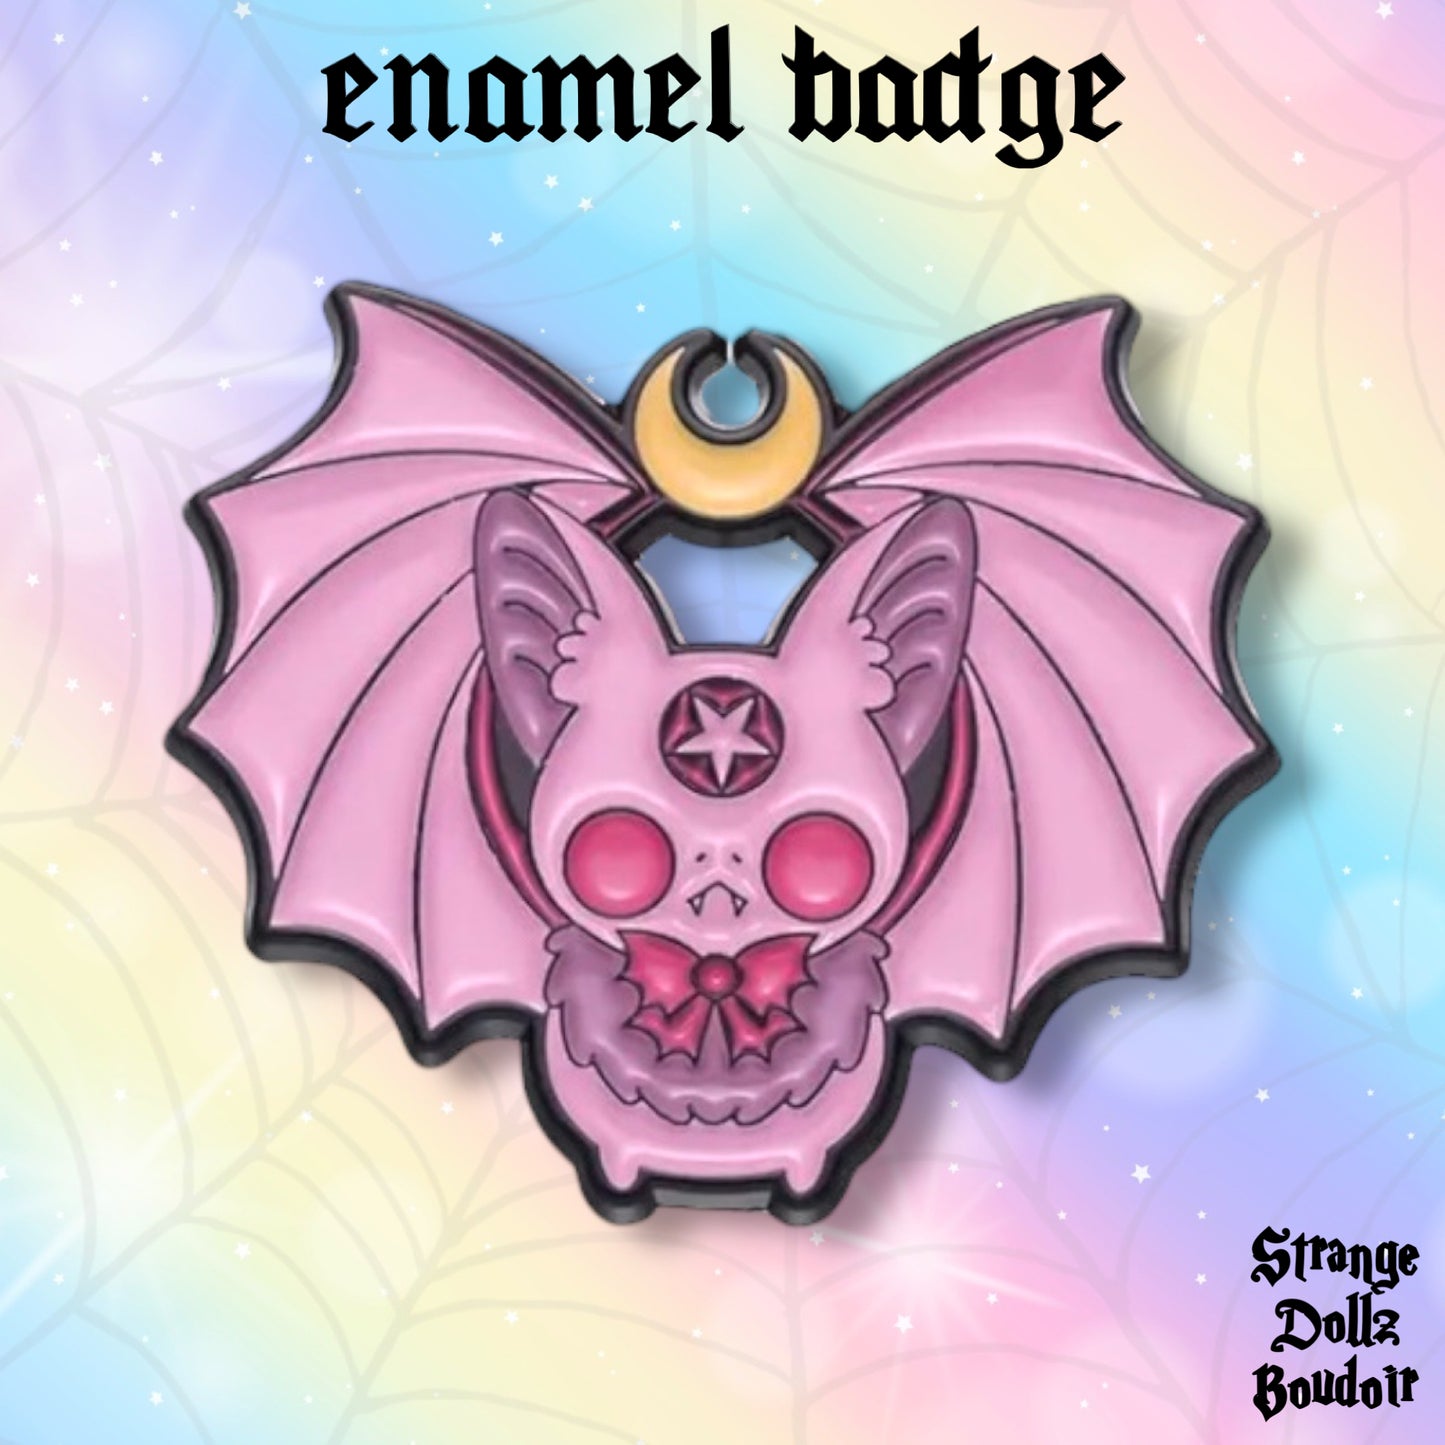 Demon bat enamel pin badge, Strange Dollz Boudoir